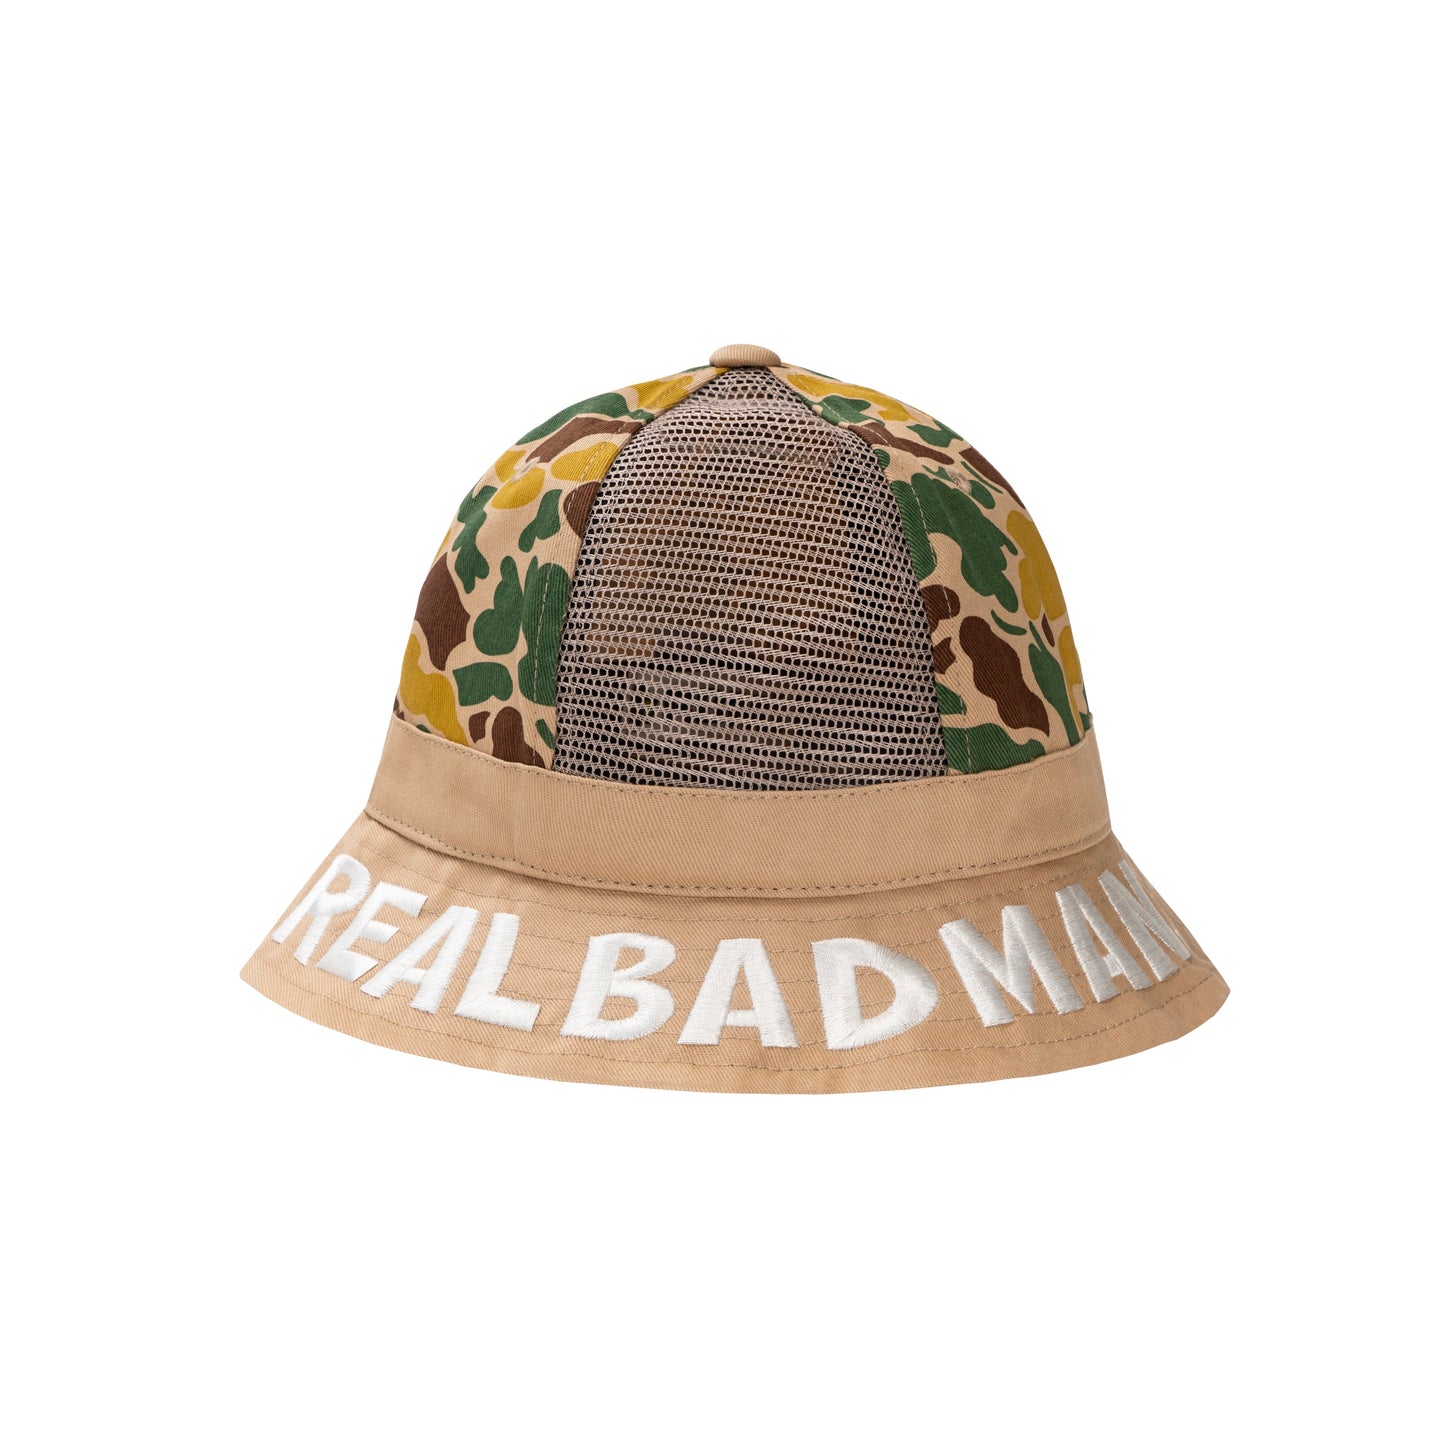 Real Bad Man Lost Hiker Bucket Hat